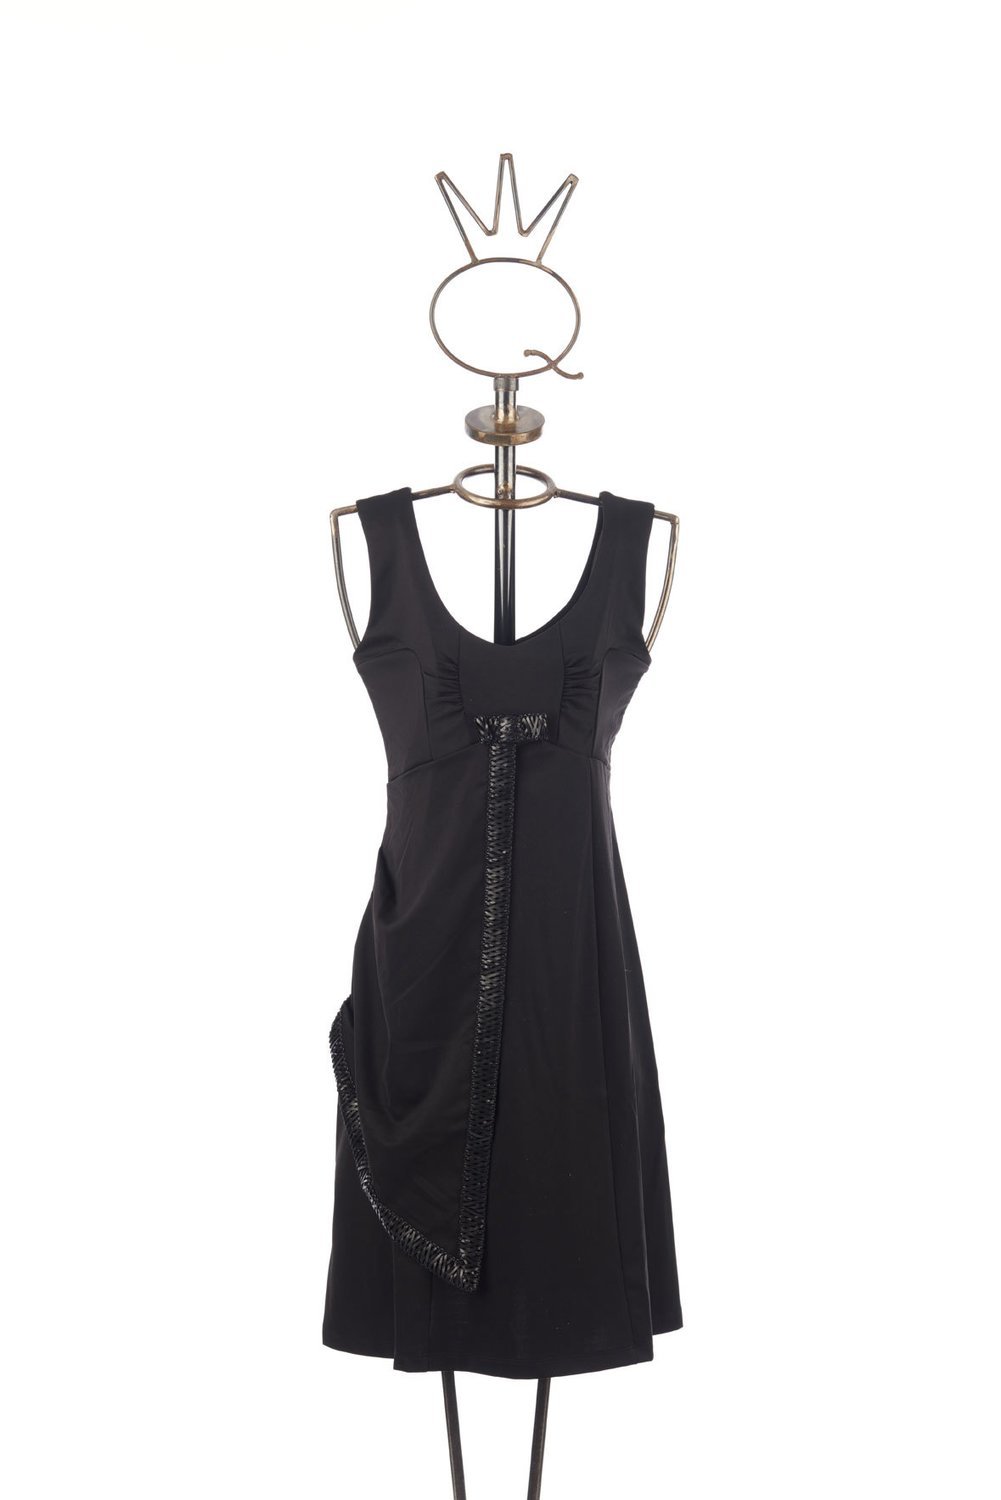 Save the Queen: Asymmetrical Draped Black Bow Dress